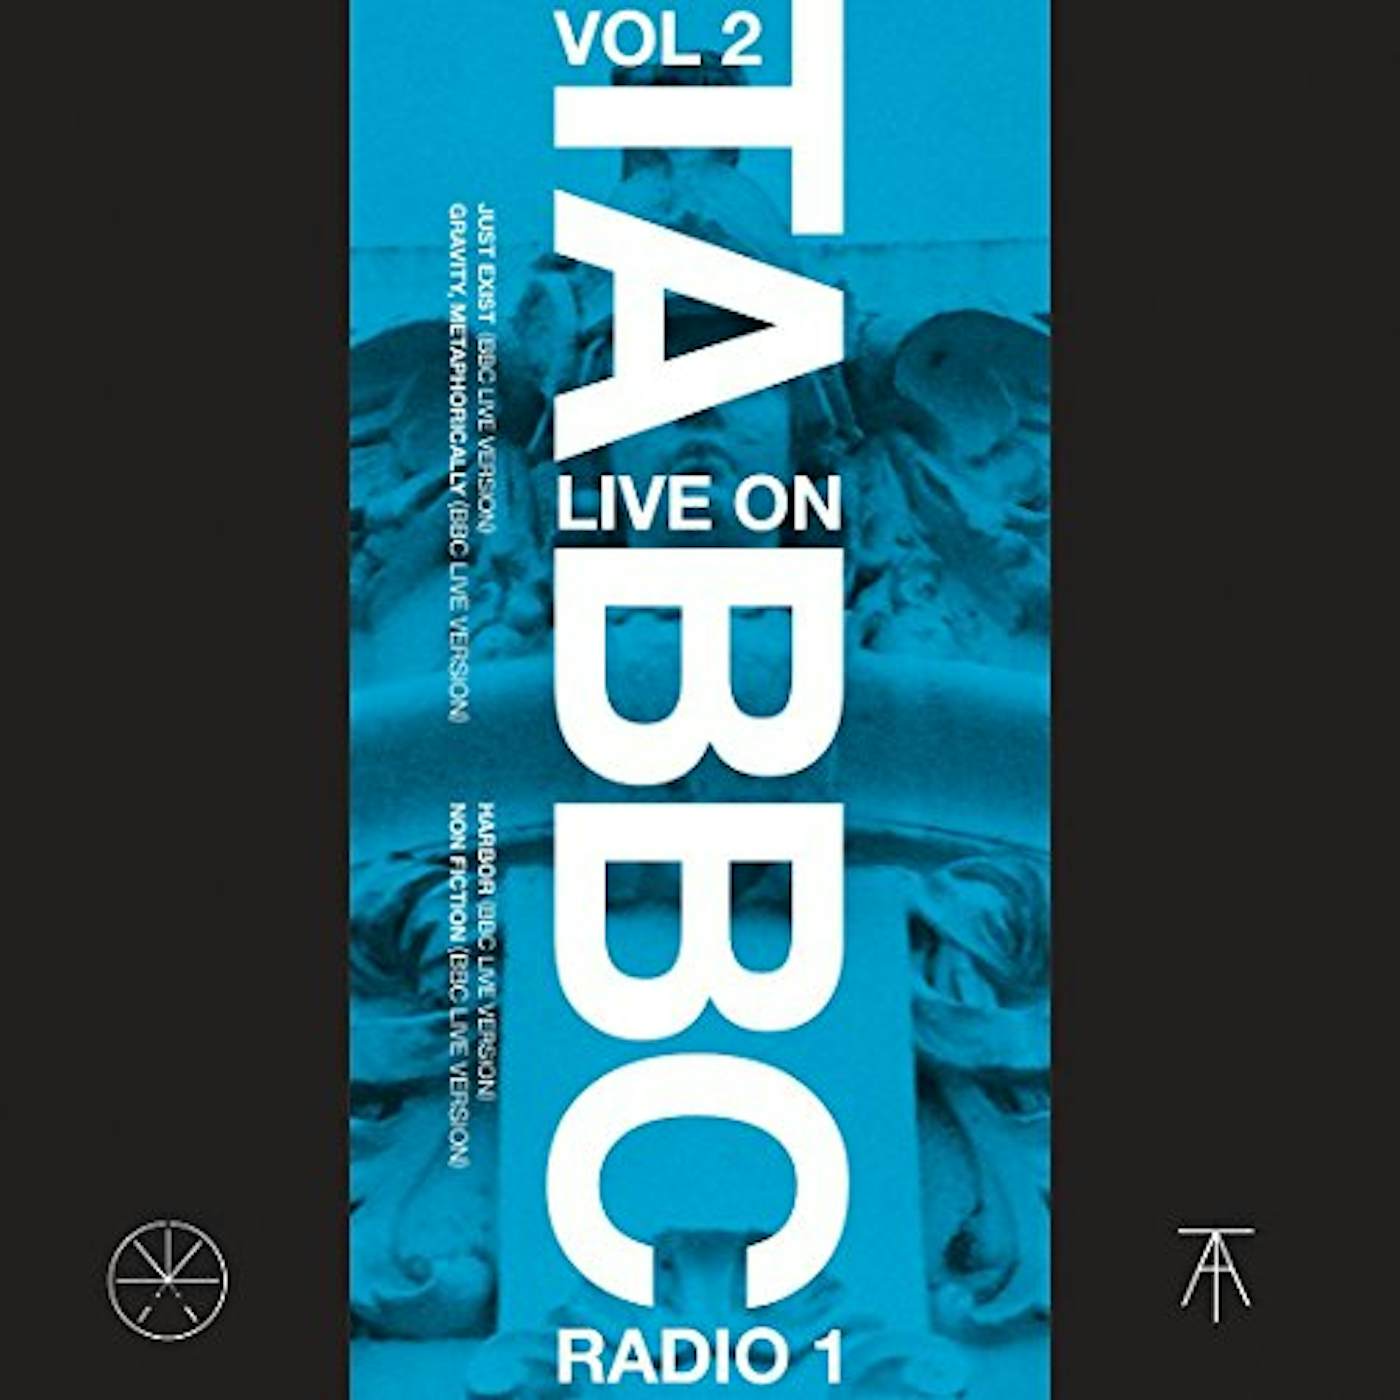 Touché Amoré LIVE ON BBC RADIO ONE: 2 Vinyl Record